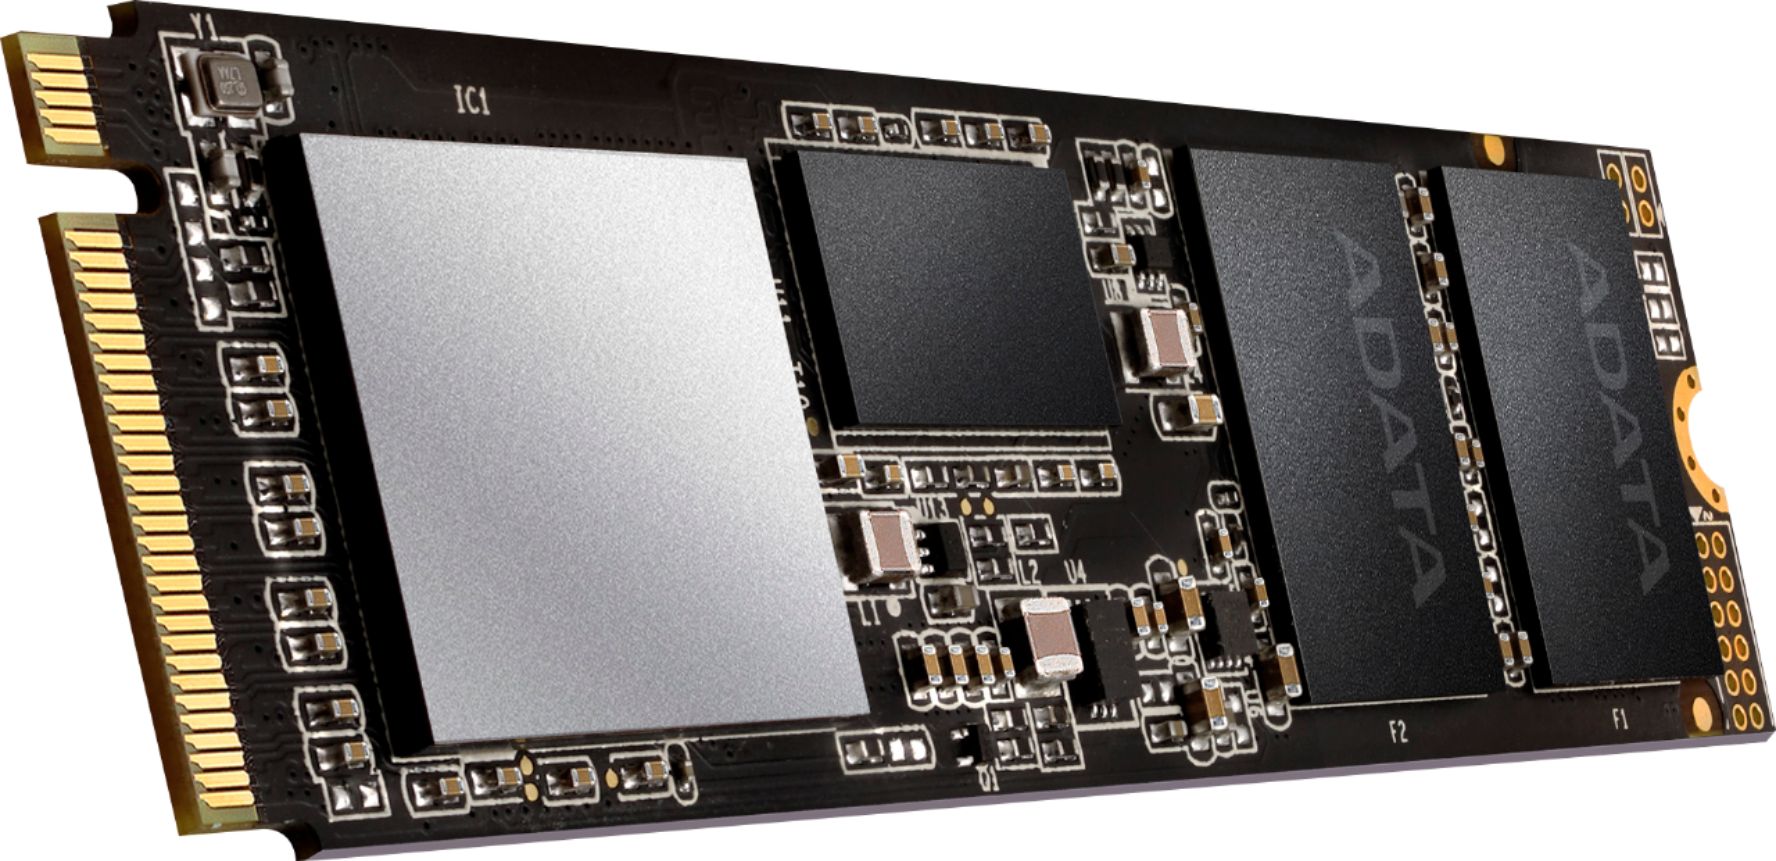 ADATA - XPG SX8200 Pro Series 256GB PCIe Gen 3 x4 M.2 2280 Internal Solid  State Drive with Flash 3D Nand Technology